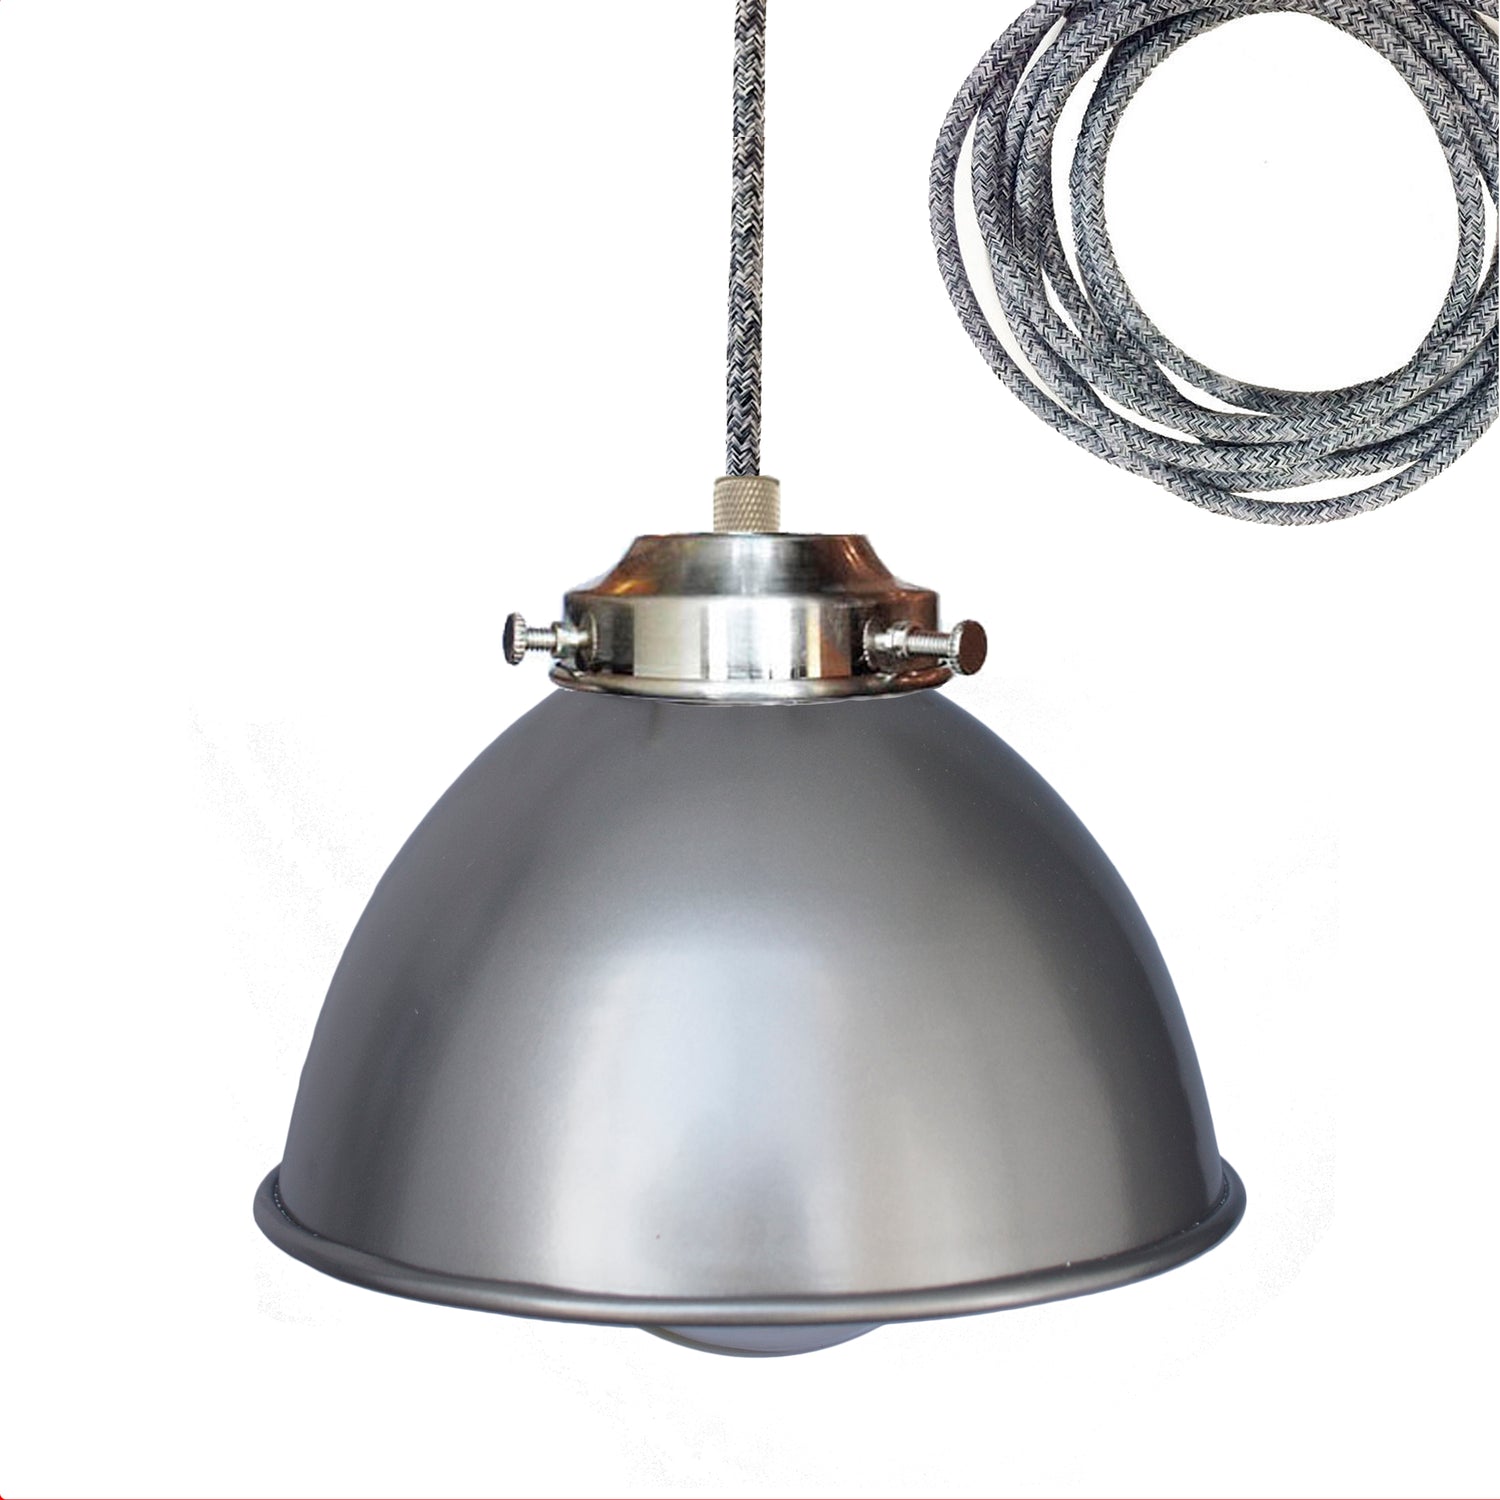 Factory Dome Nickel Metal Shade Pendant Light